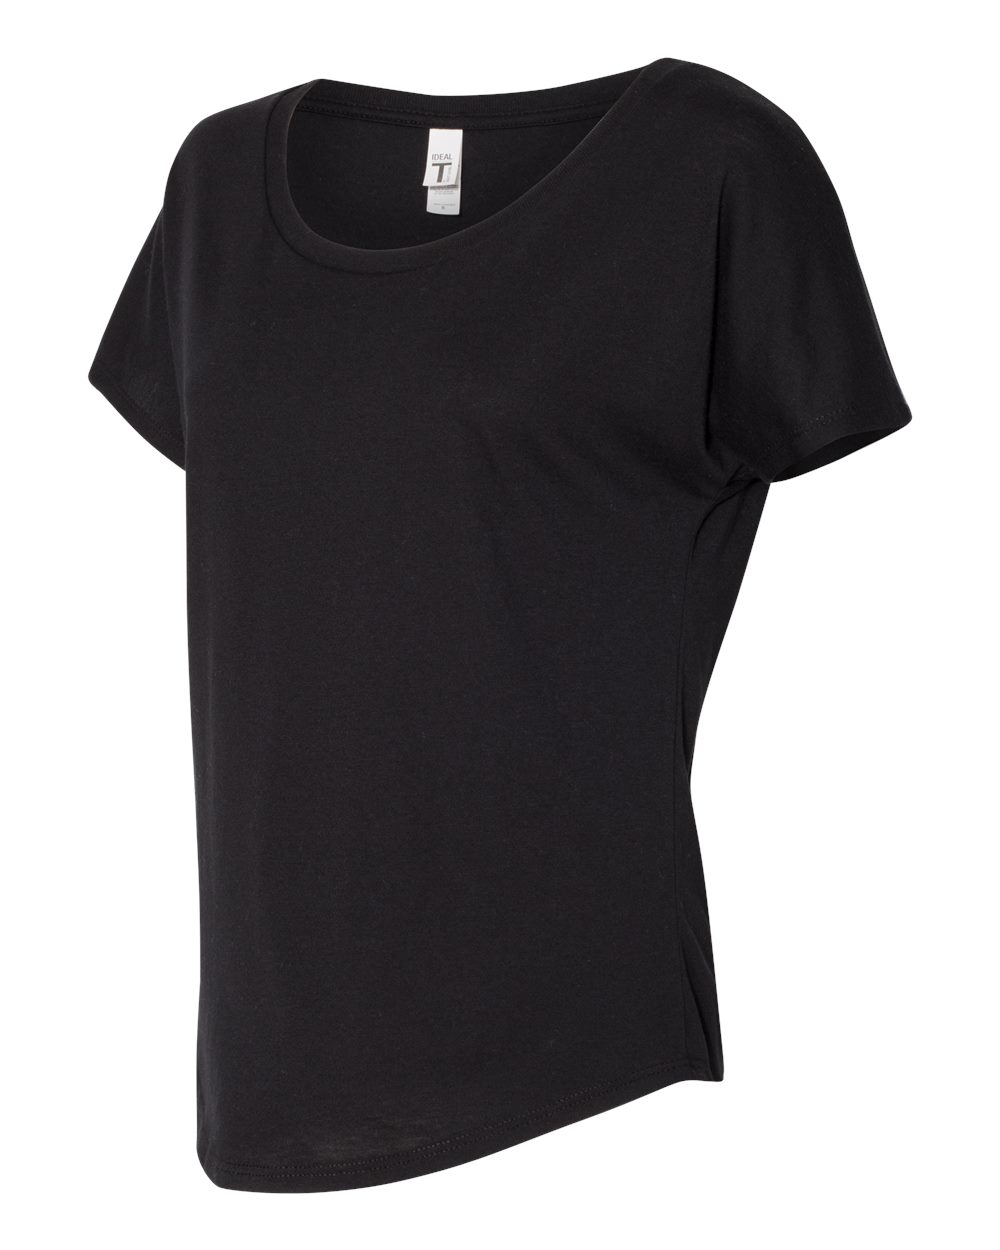 Next Level 1560 - Women's Ideal Dolman $6.53 - T-Shirts